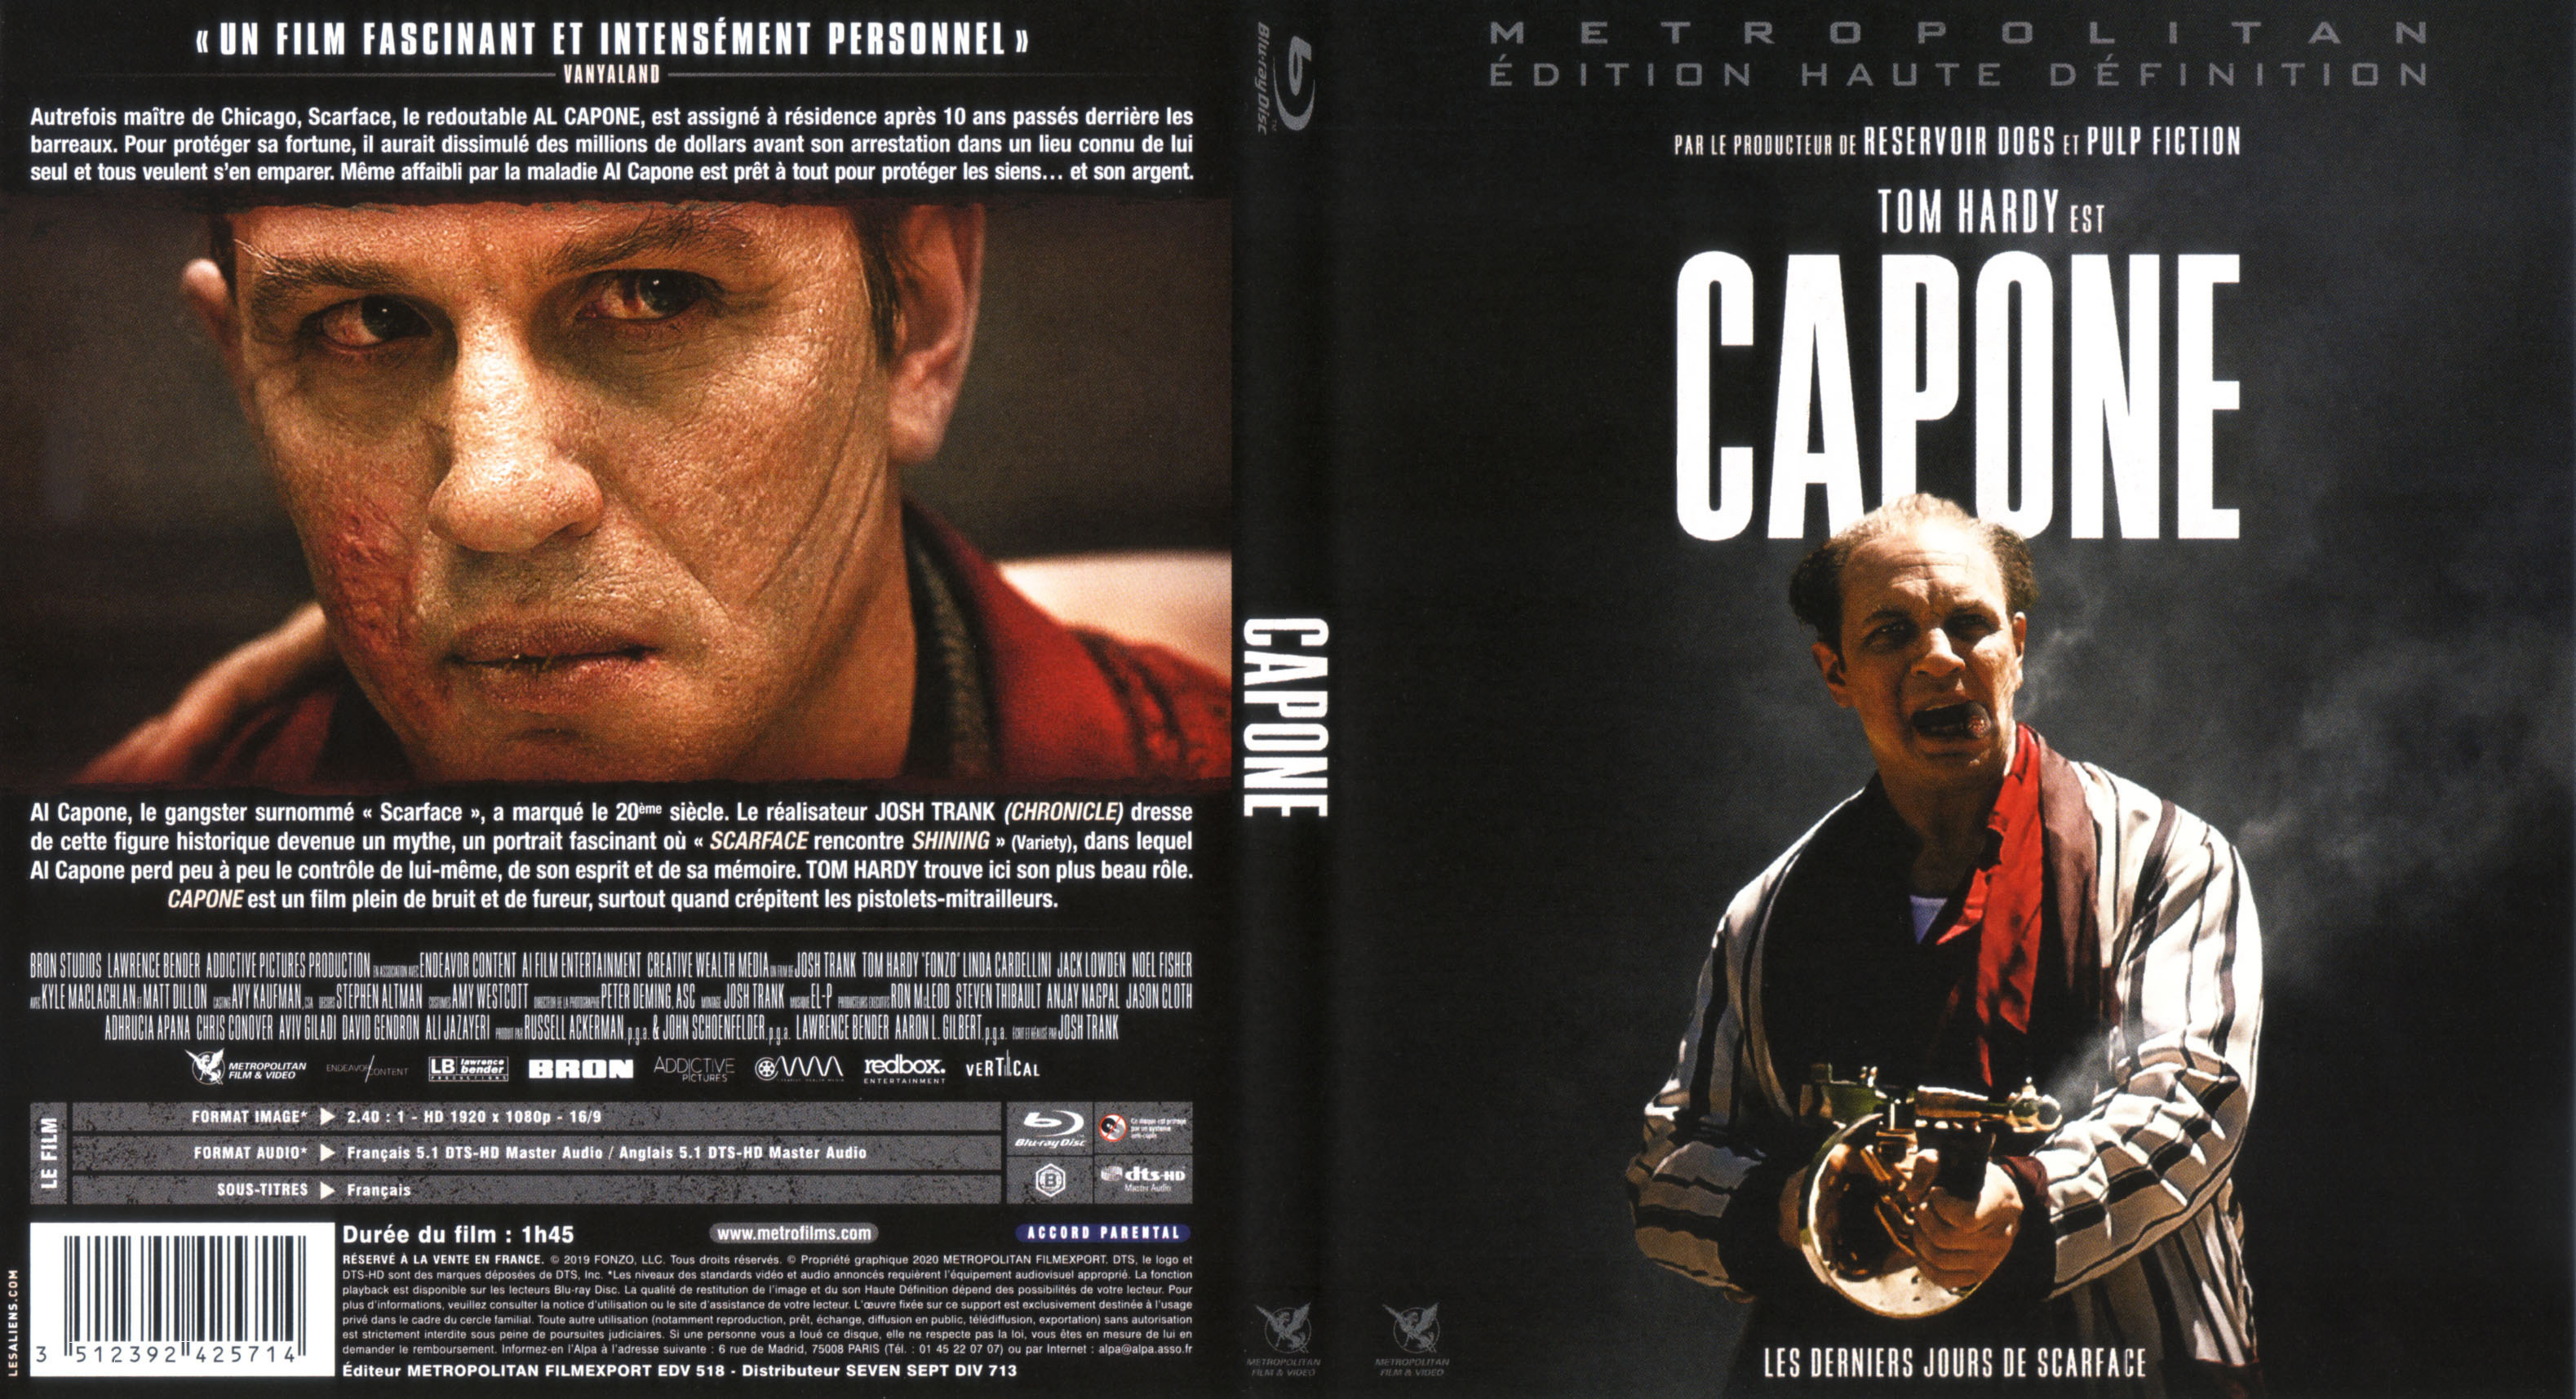 Jaquette DVD Capone 2019 (BLU-RAY)